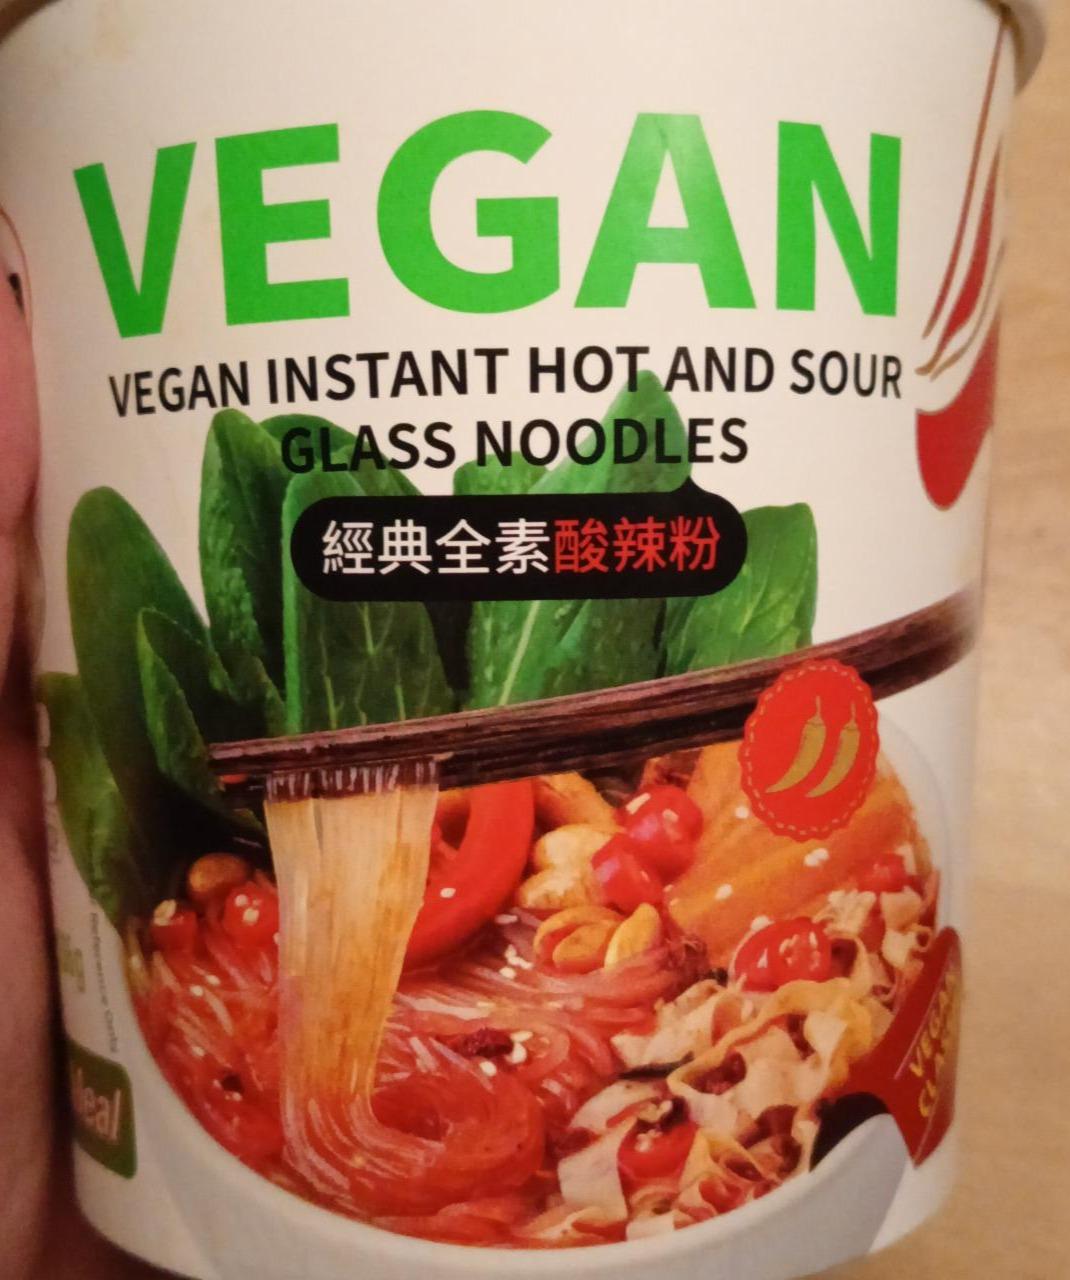 Fotografie - Vegan instant hot and sour glass noodles Zheng Wen